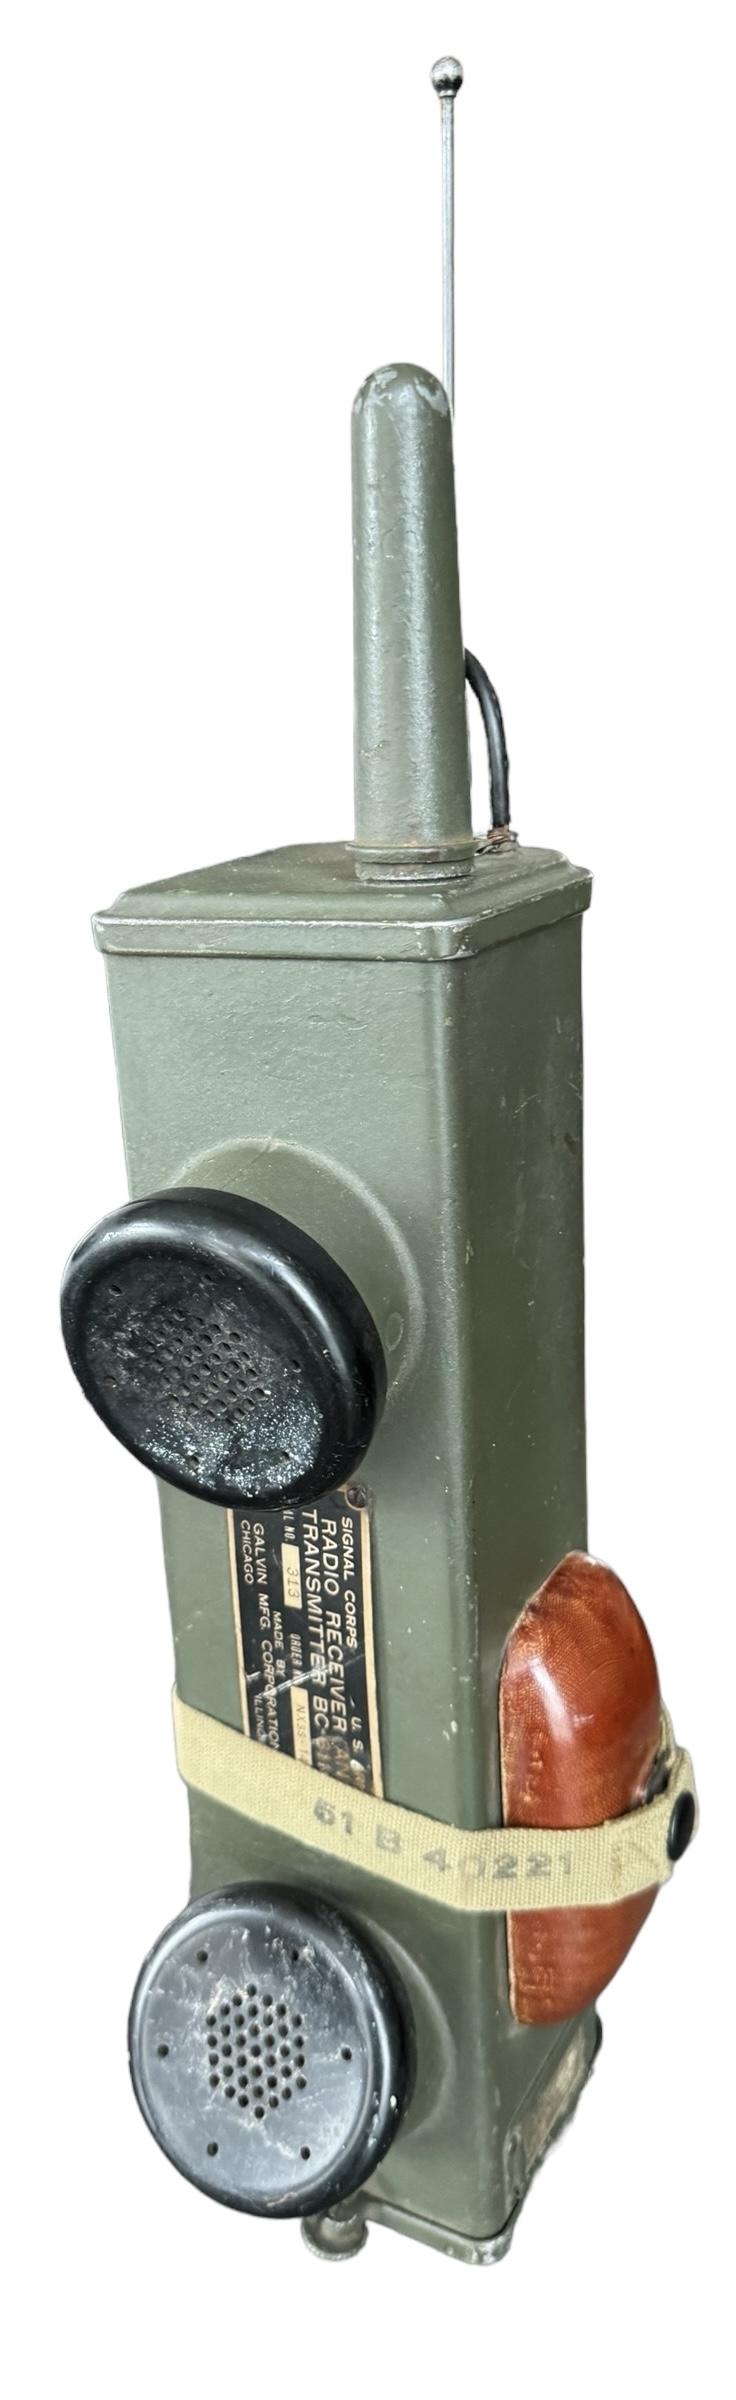 U.S. (Airborne) SCR-536 i.e BC-611 Handie Talkie Radio - Nice Used Condition